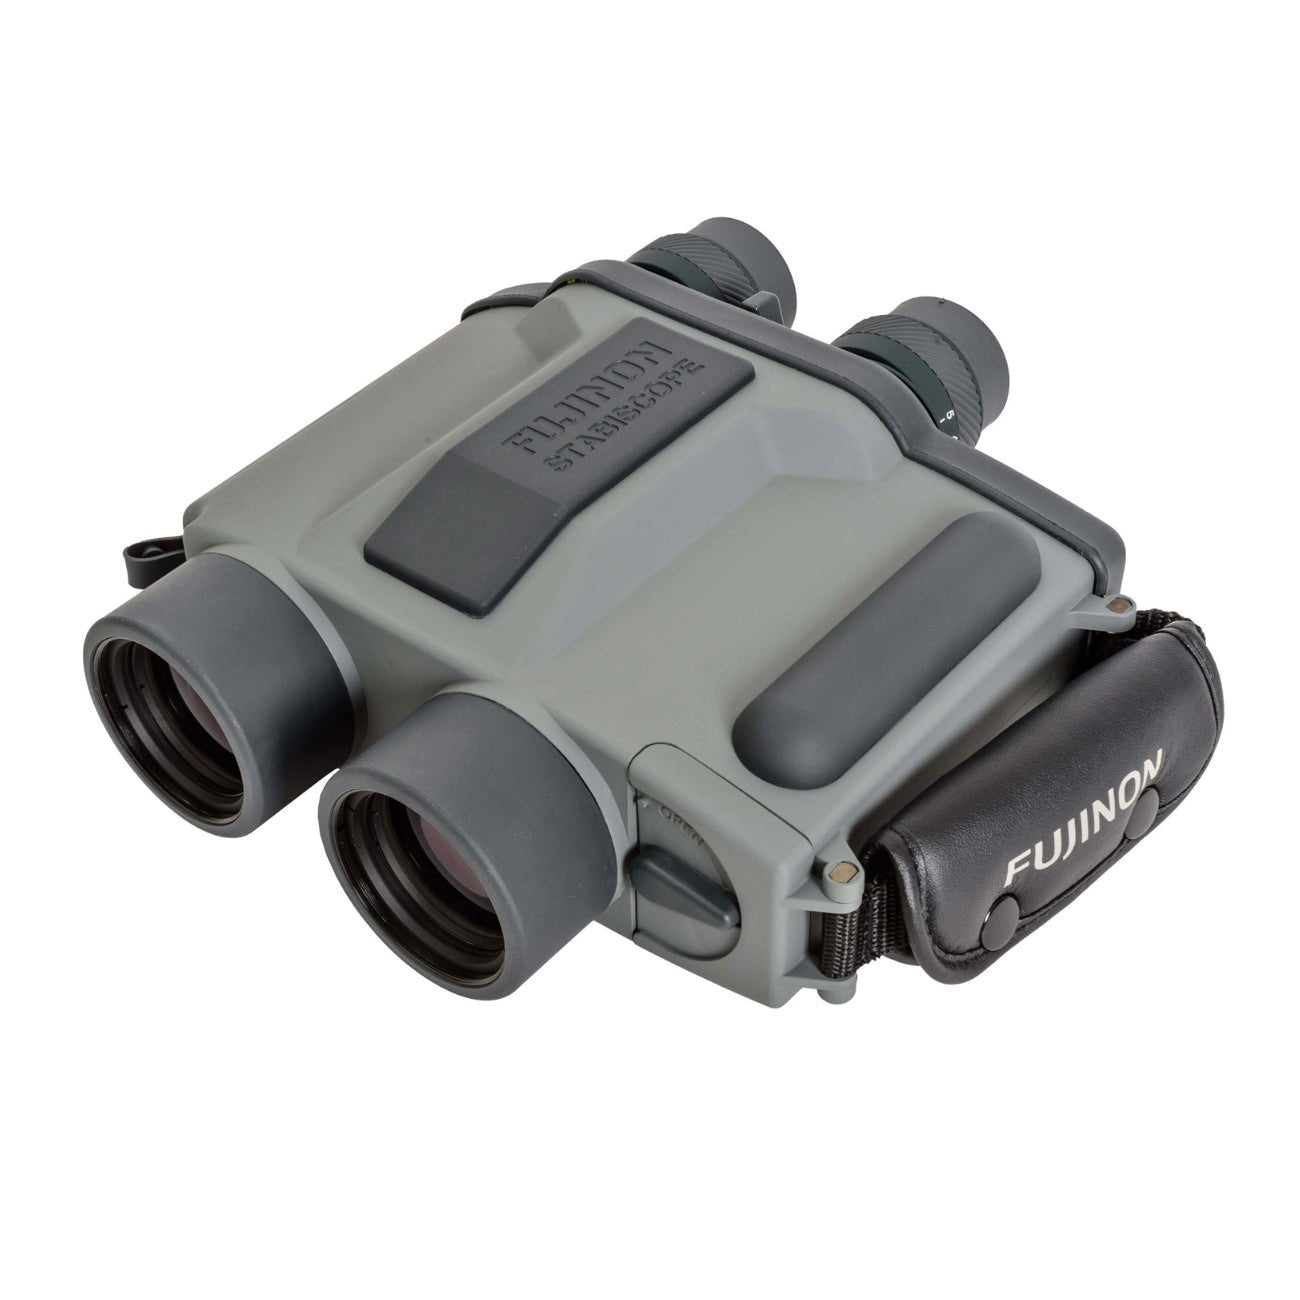 Fujinon S1240 Stabiscope 12x40mm Day/Night Vision Binoculars